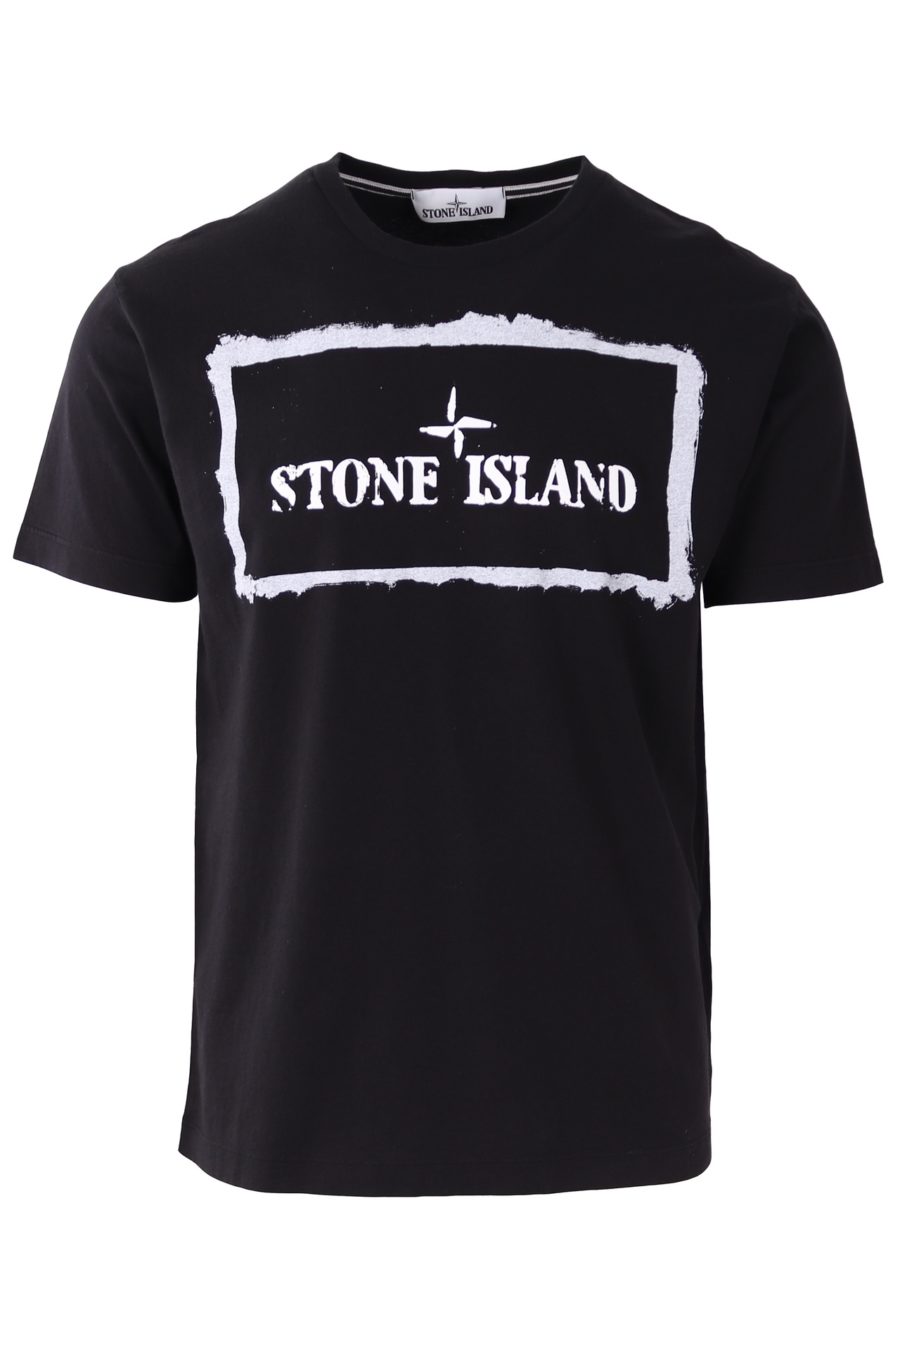 Camiseta Stone Island negra con logo blanco - 6c0a5f4c88257169e58e69c0ab4a307a69978211